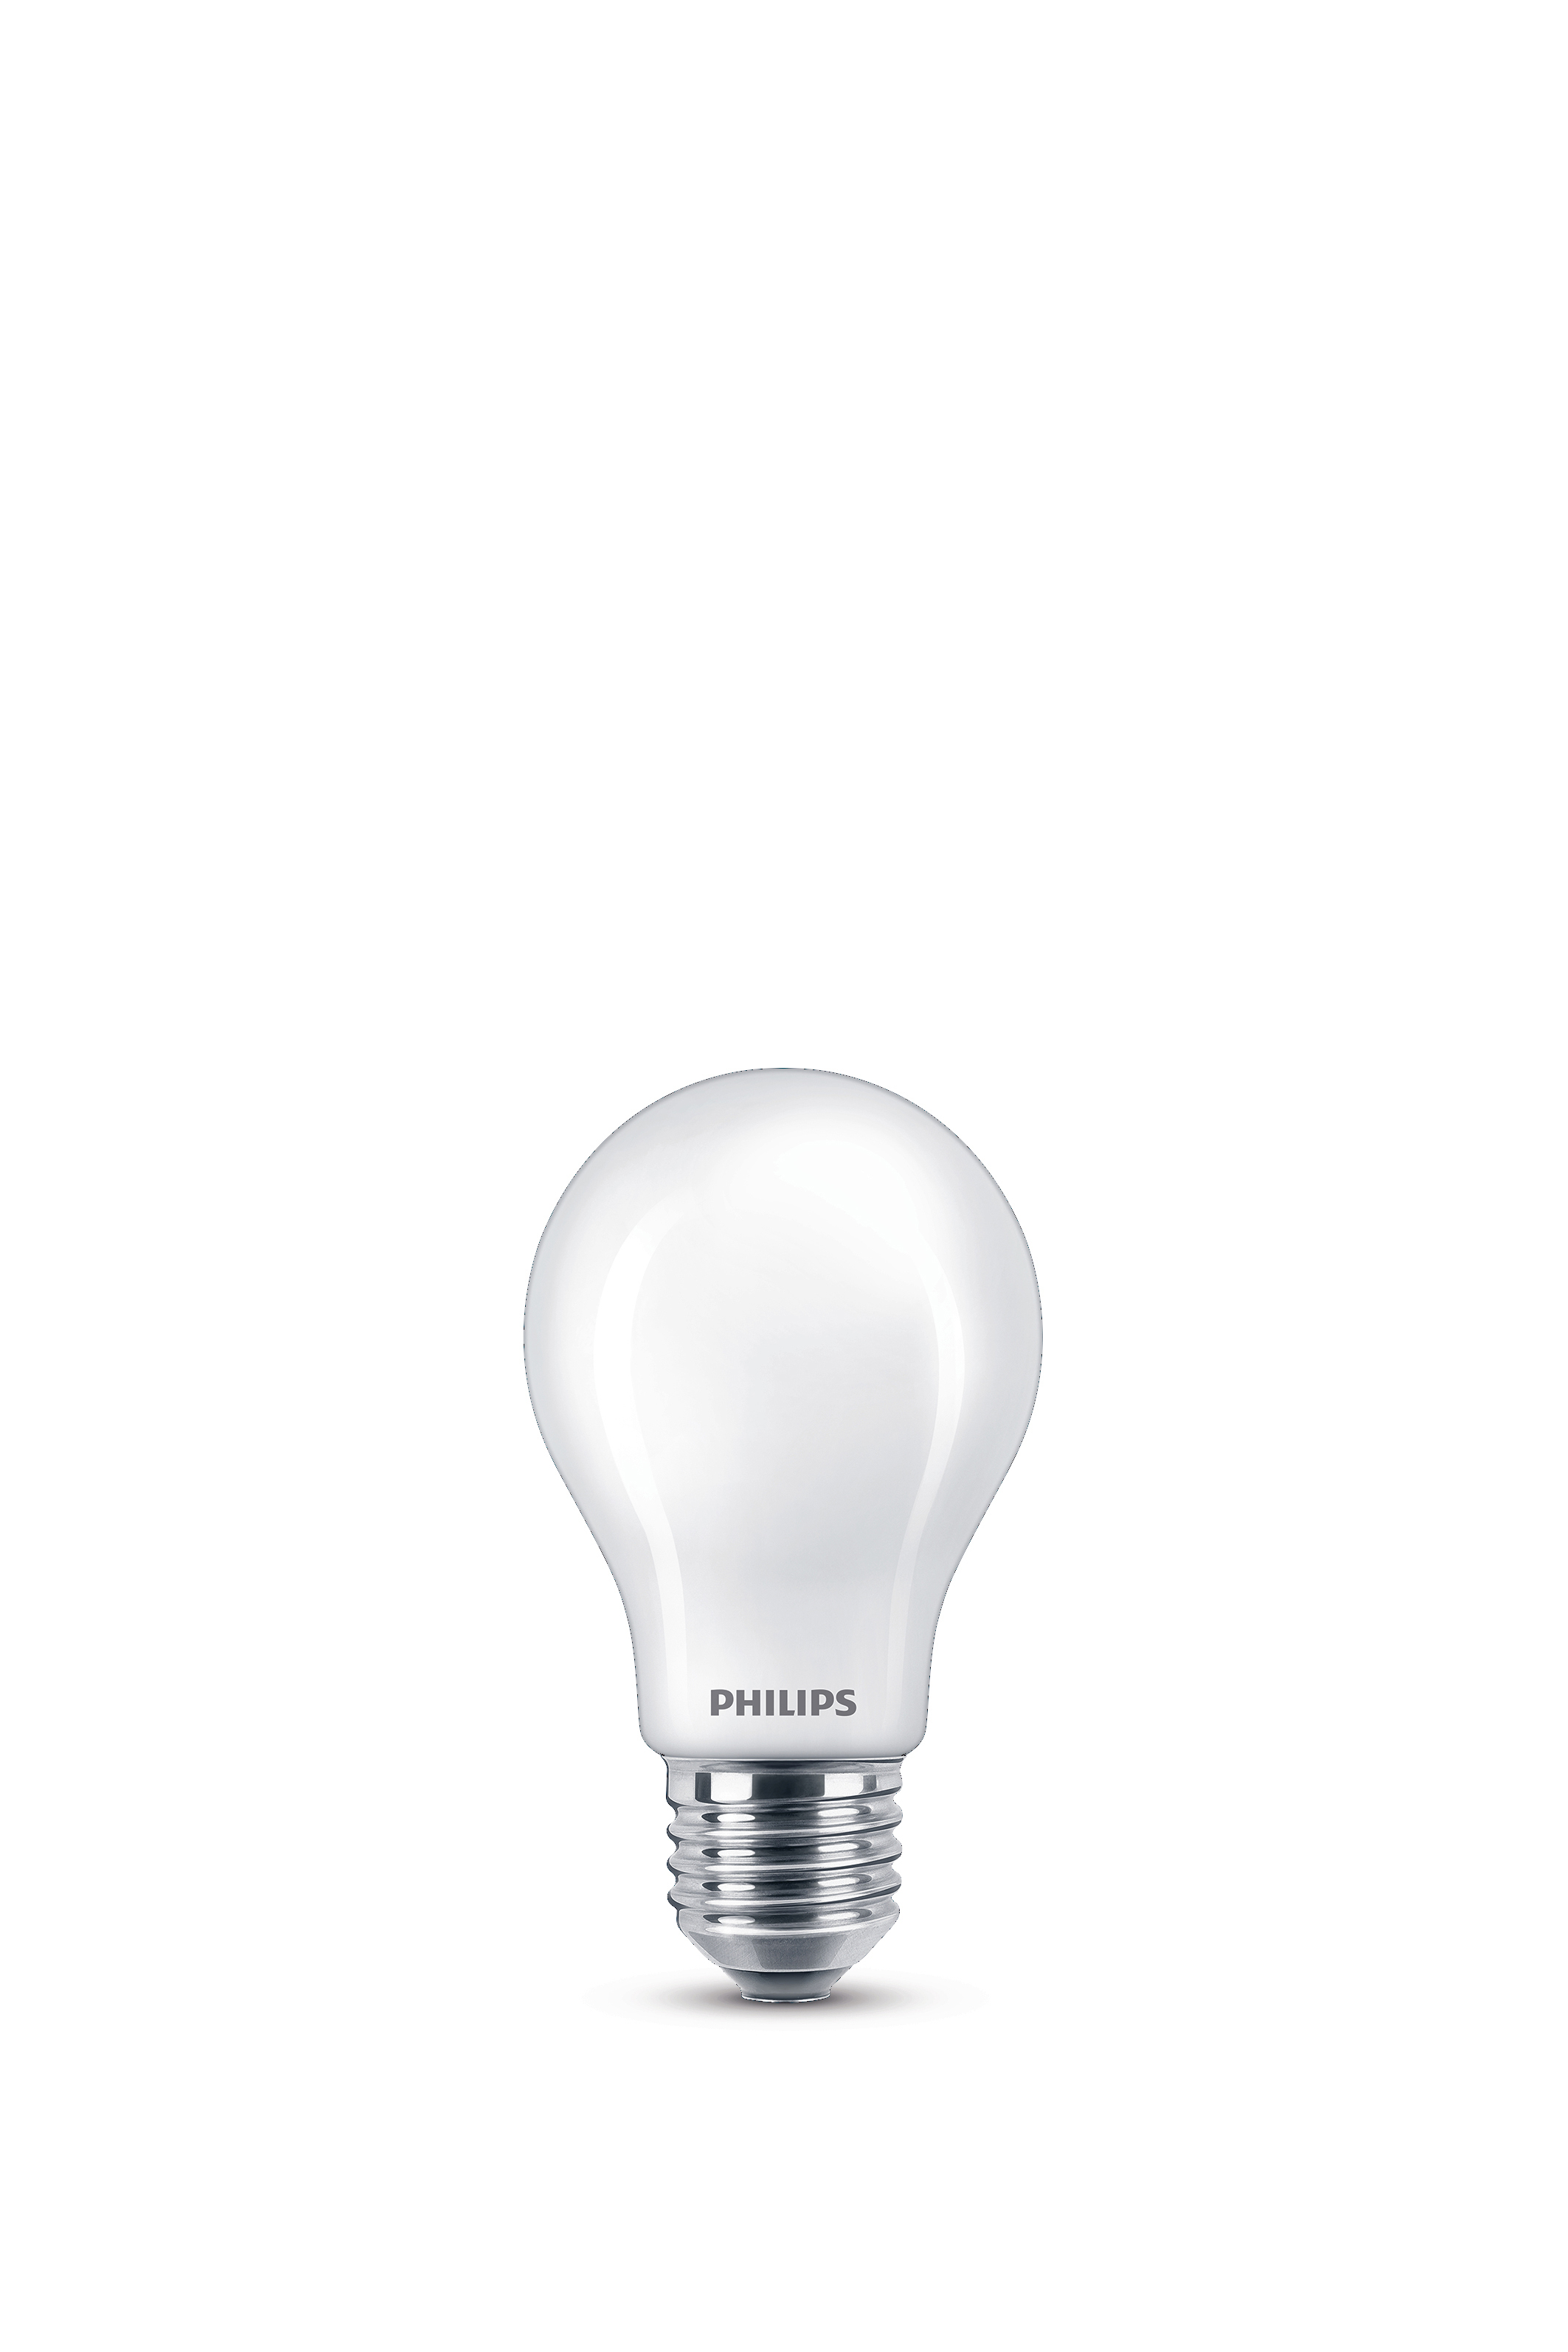 PHILIPS LEDclassic Lampe ersetzt Lampe 40W neutralweiß LED